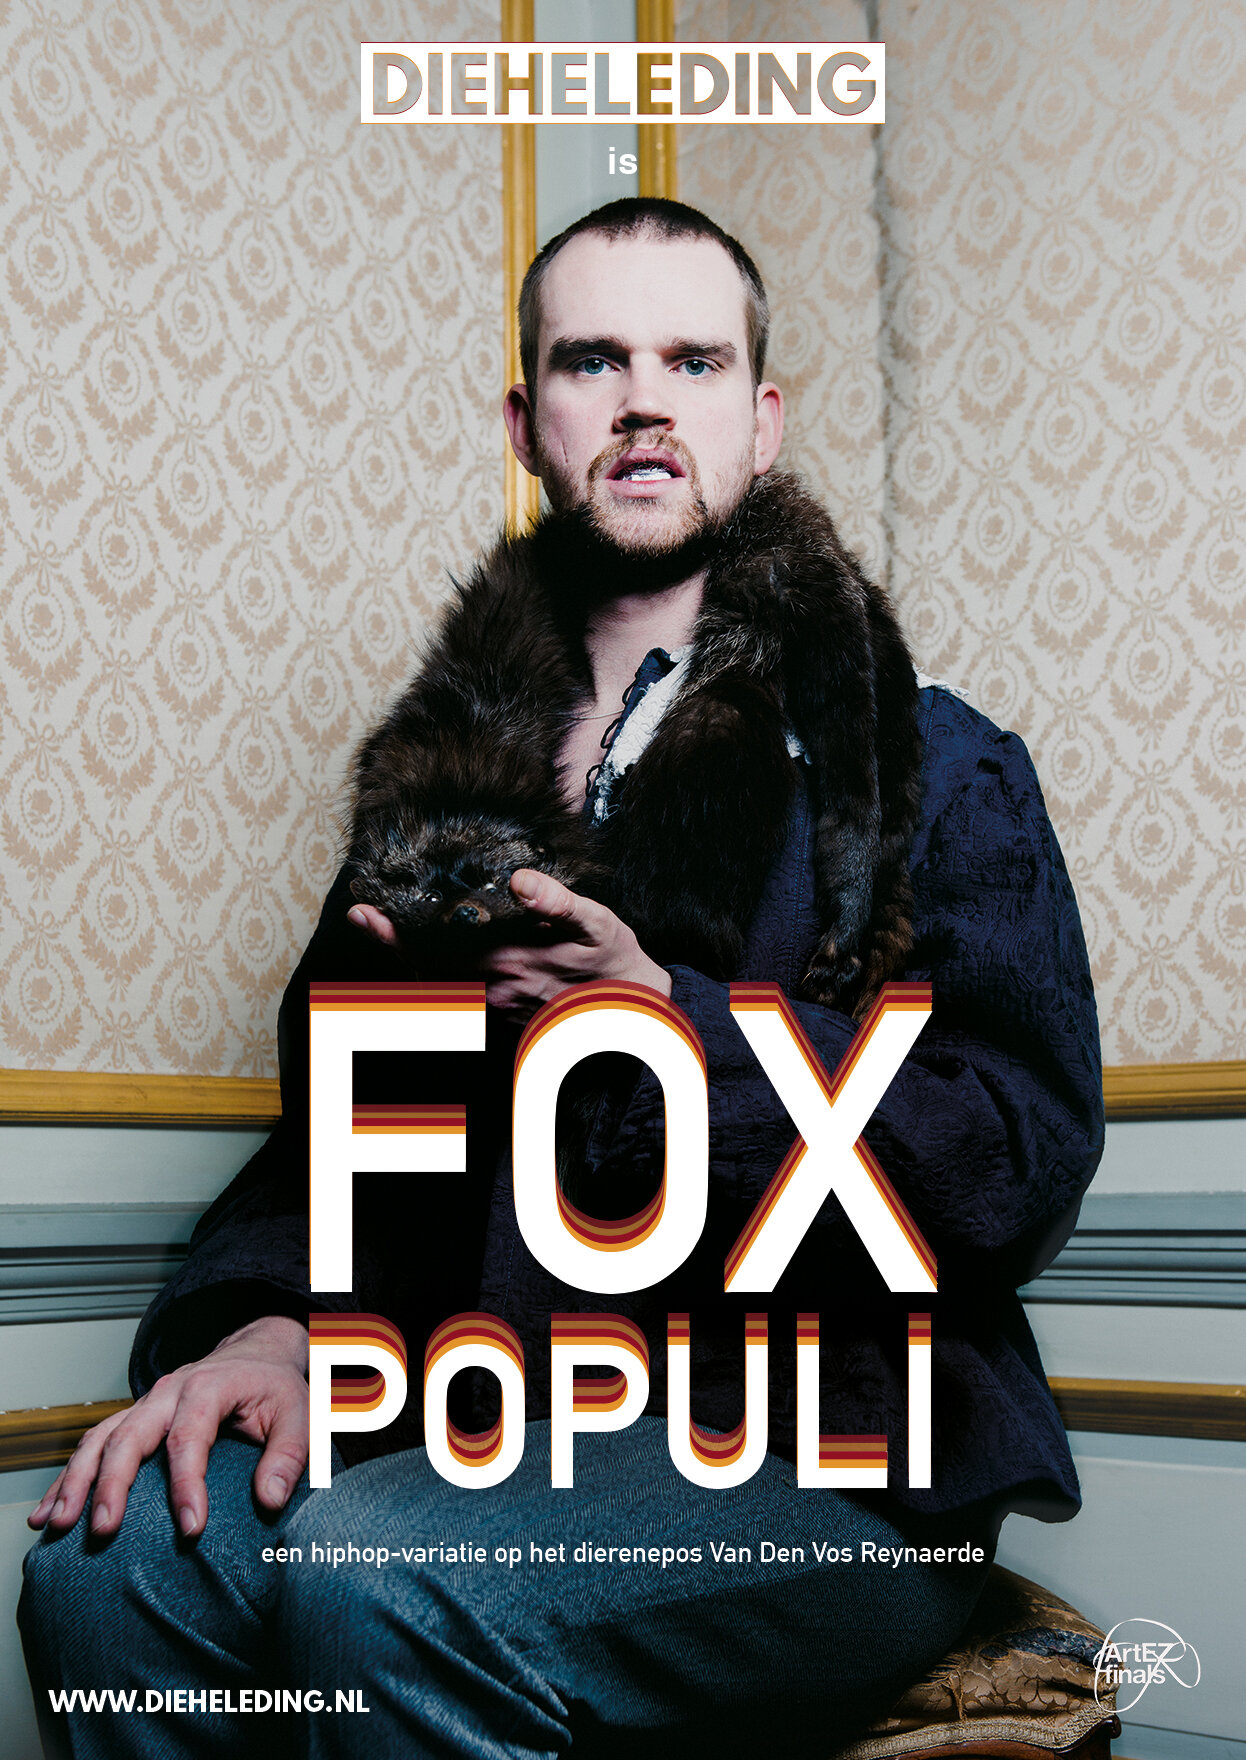 Fox populi poster A3 - v4 9 aprilSteven@0,25x.jpg